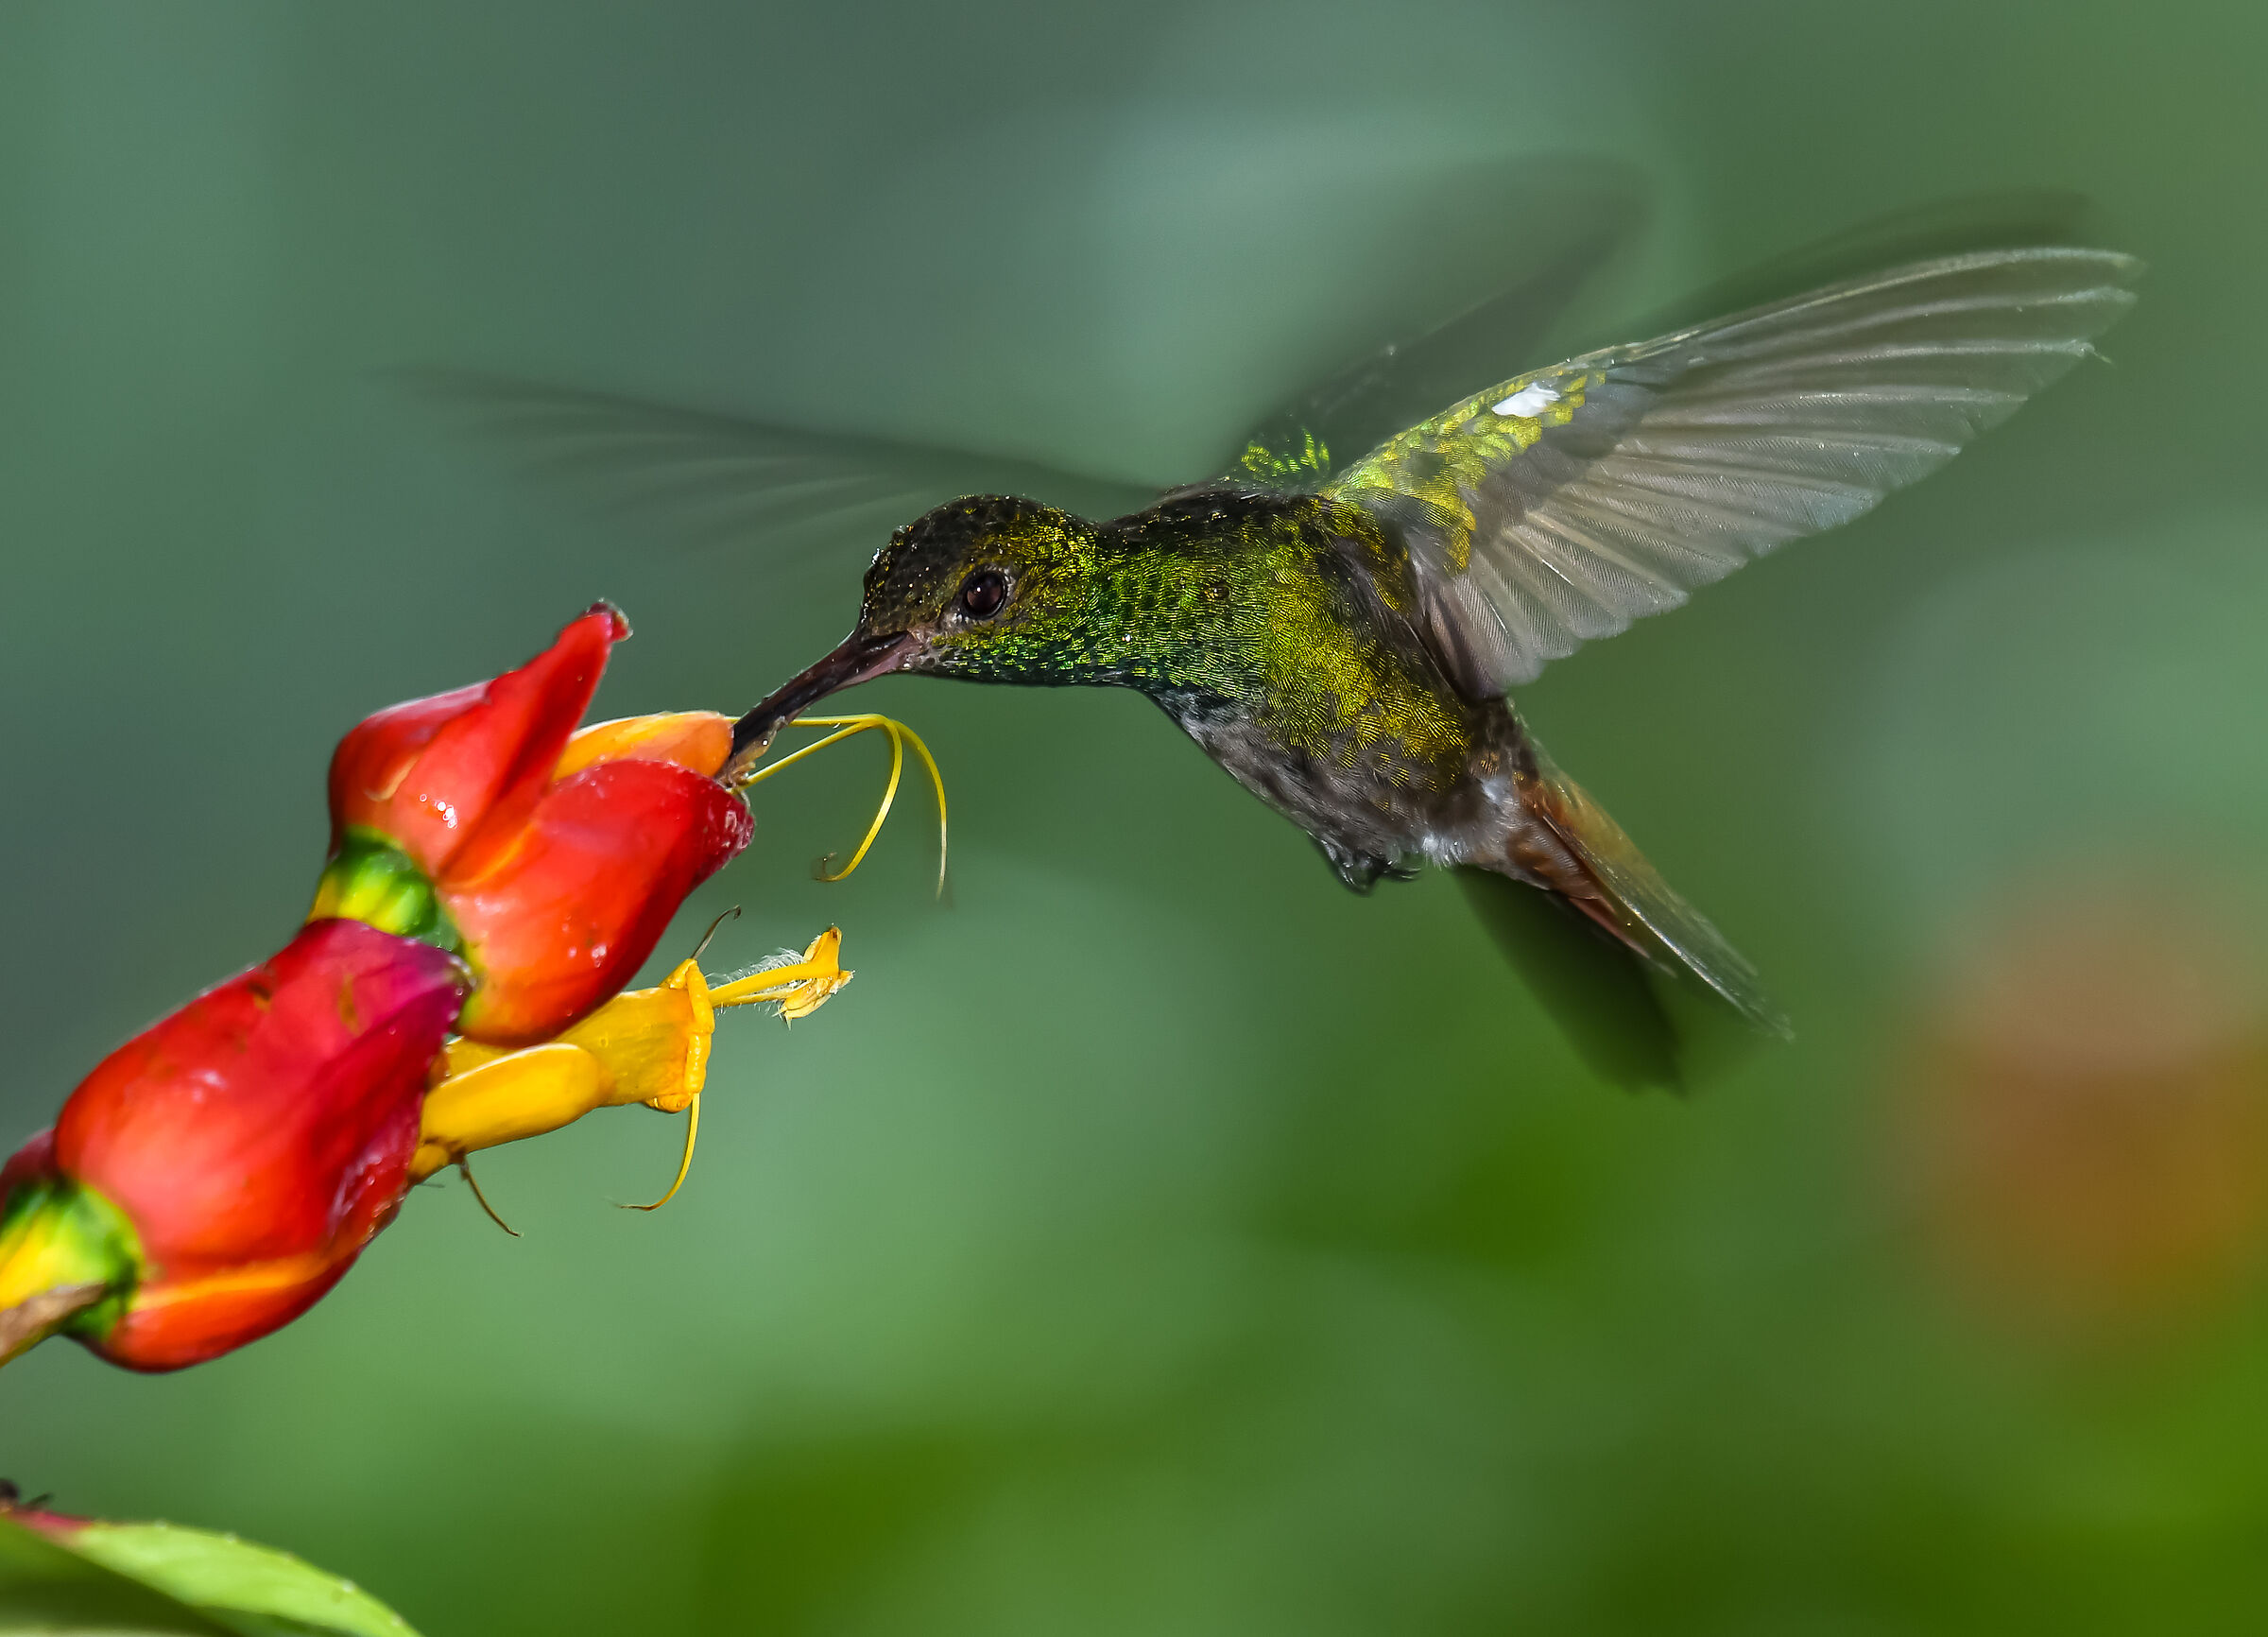 The flight of the hummingbird...